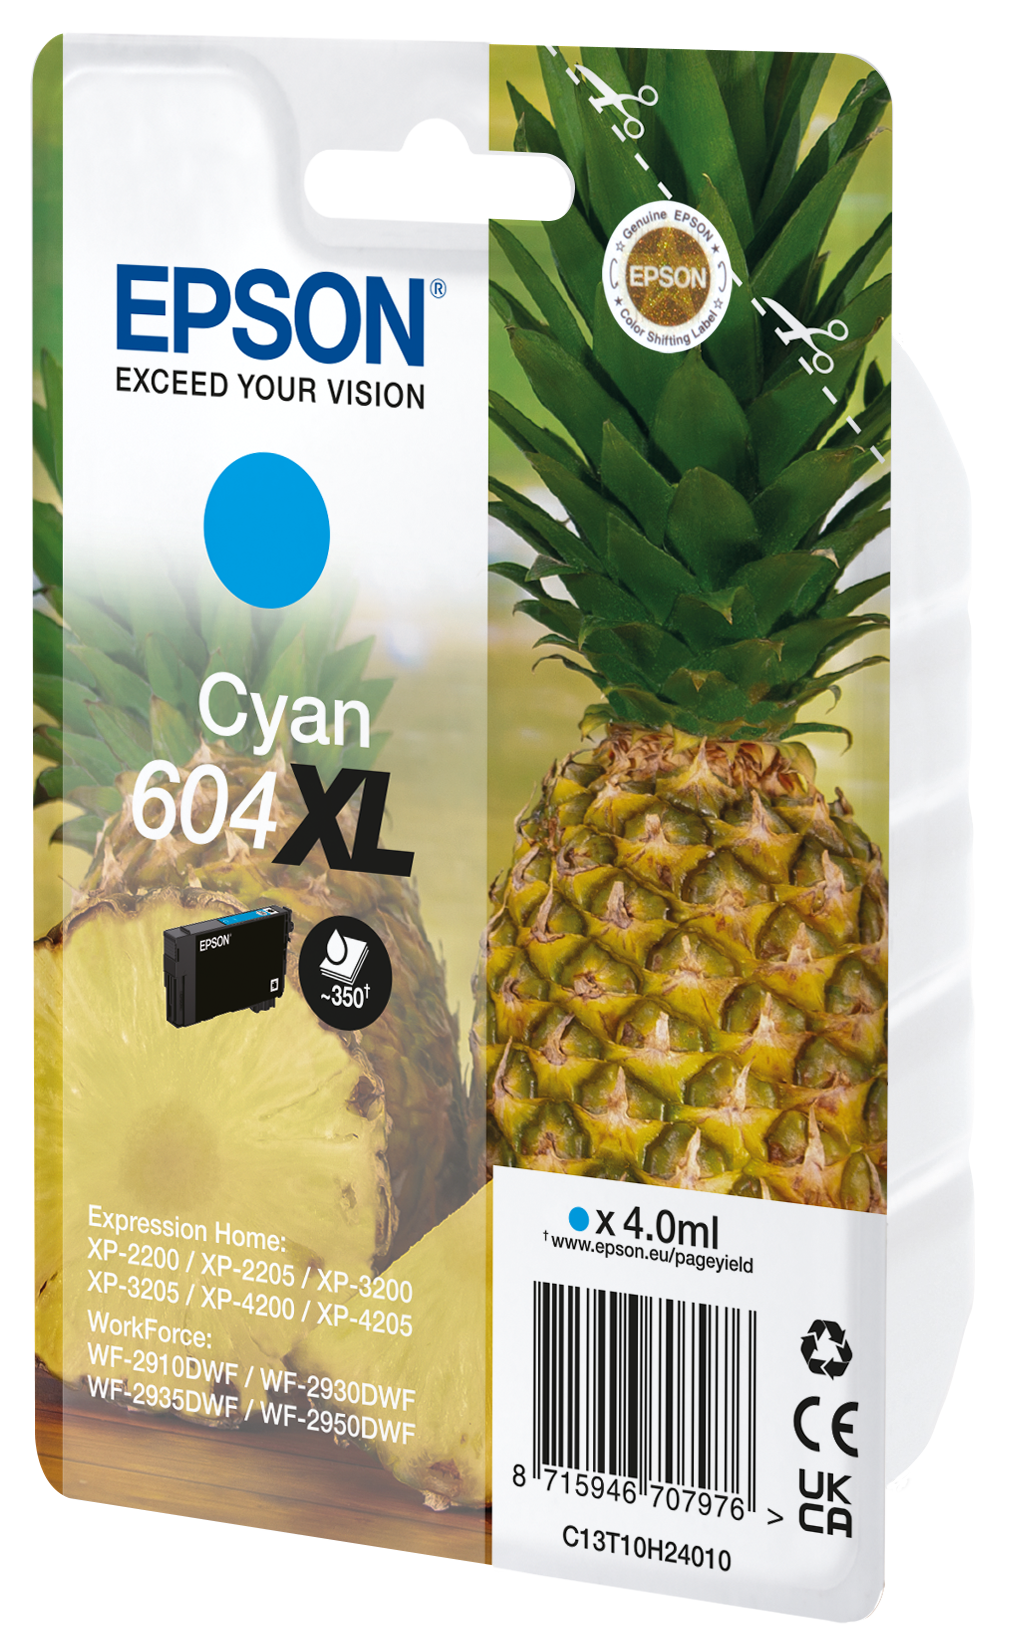 Epson 604XL single pack / cyaan